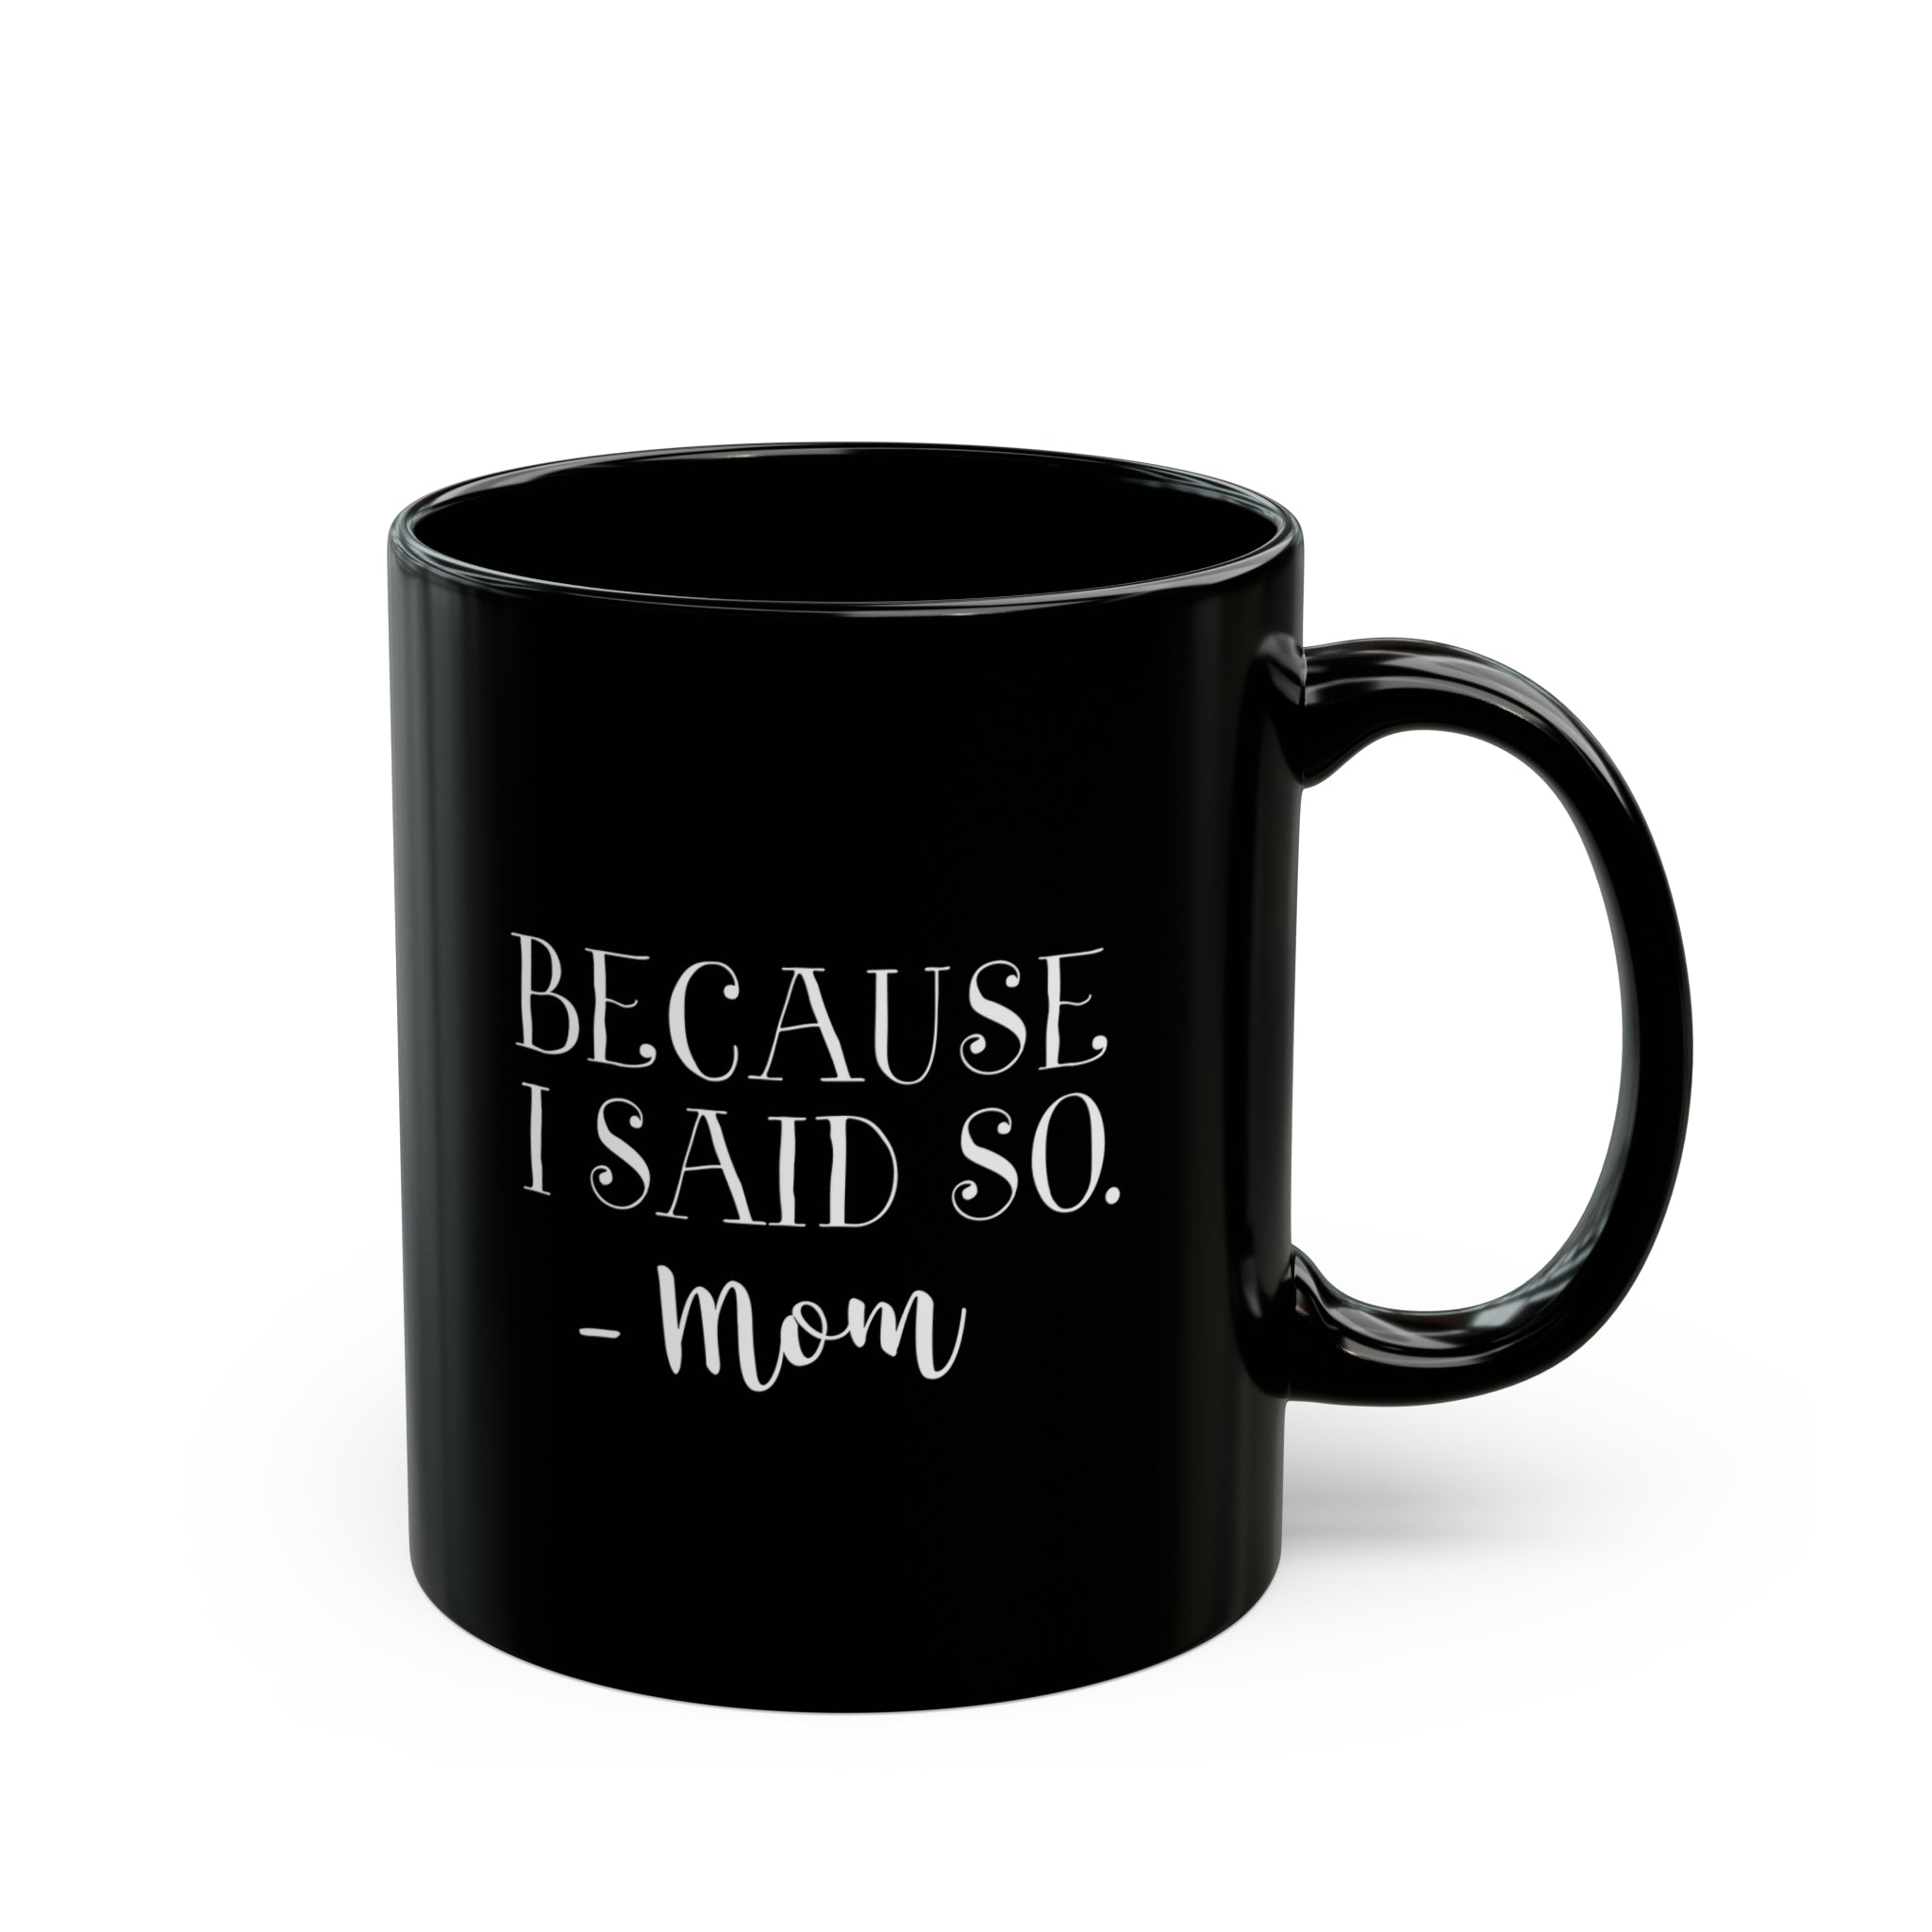 Mom Funny Black Mug (11oz, 15oz) Because I Said So -Mom Gift For Mom Mother's Day Gift Mother's Day Birthday Christmas Valentine's Gift Cup